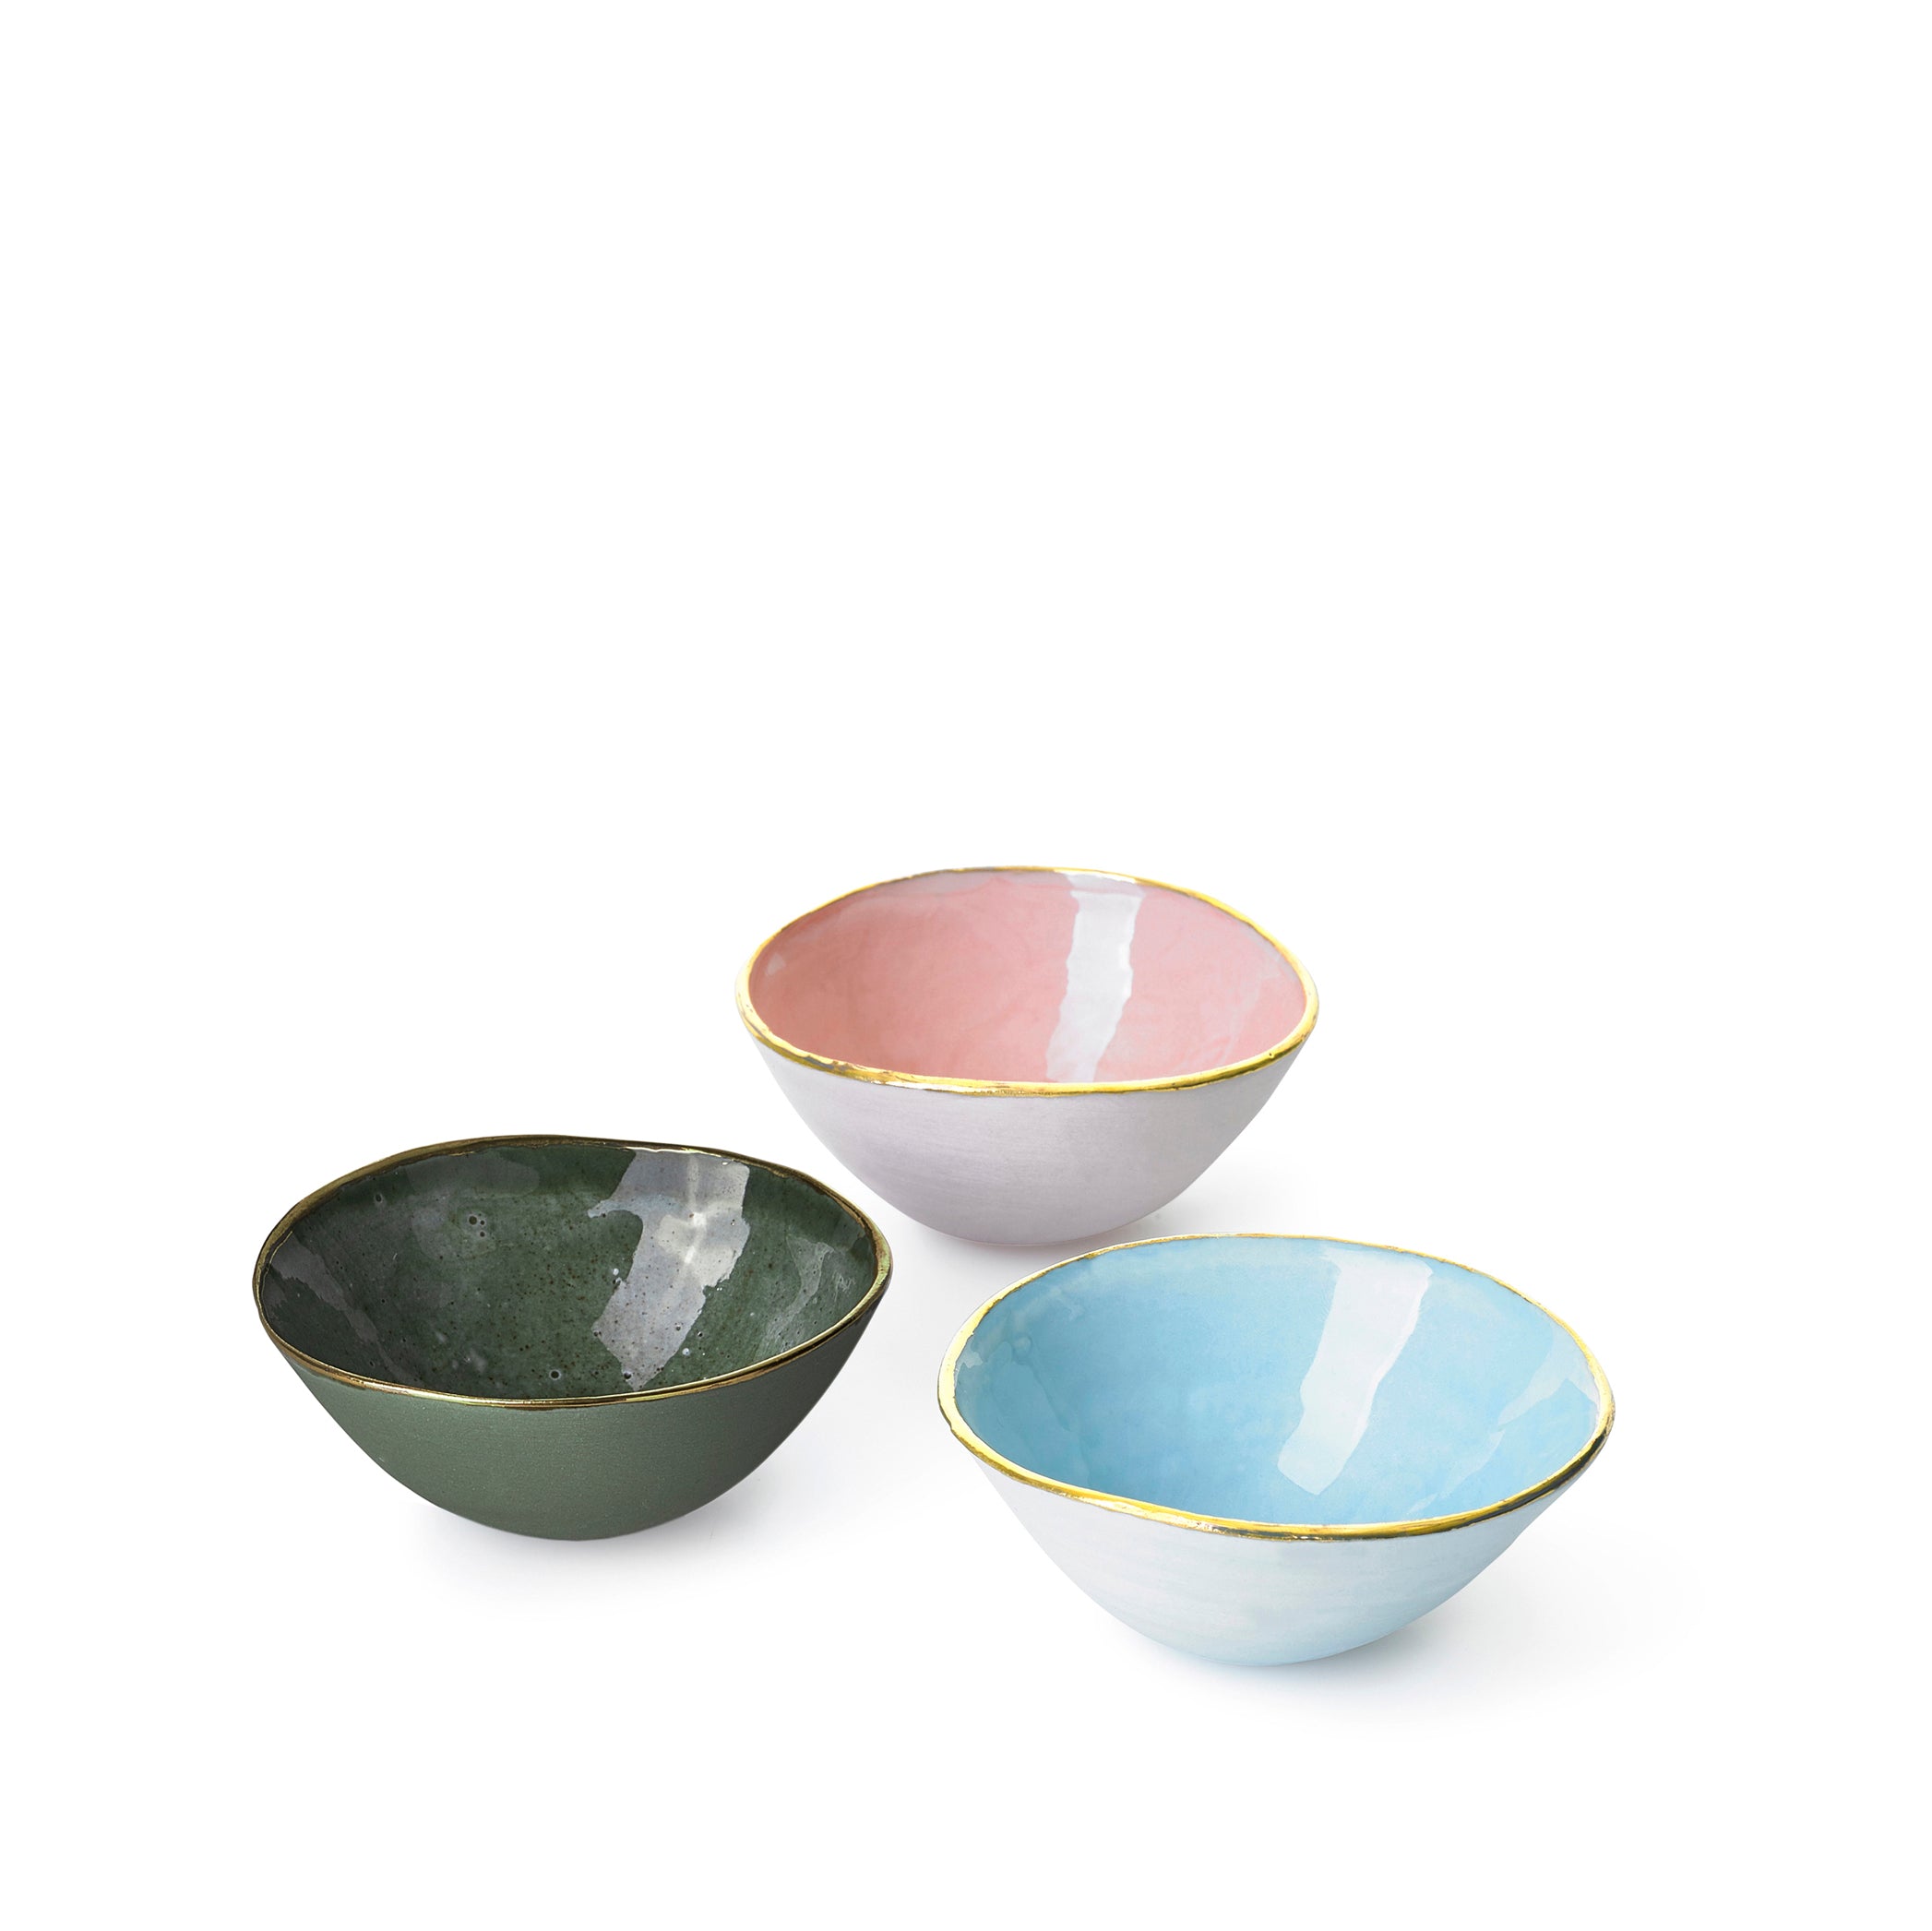 Olive Green Ceramic Bowl with Gold Rim, 10cm